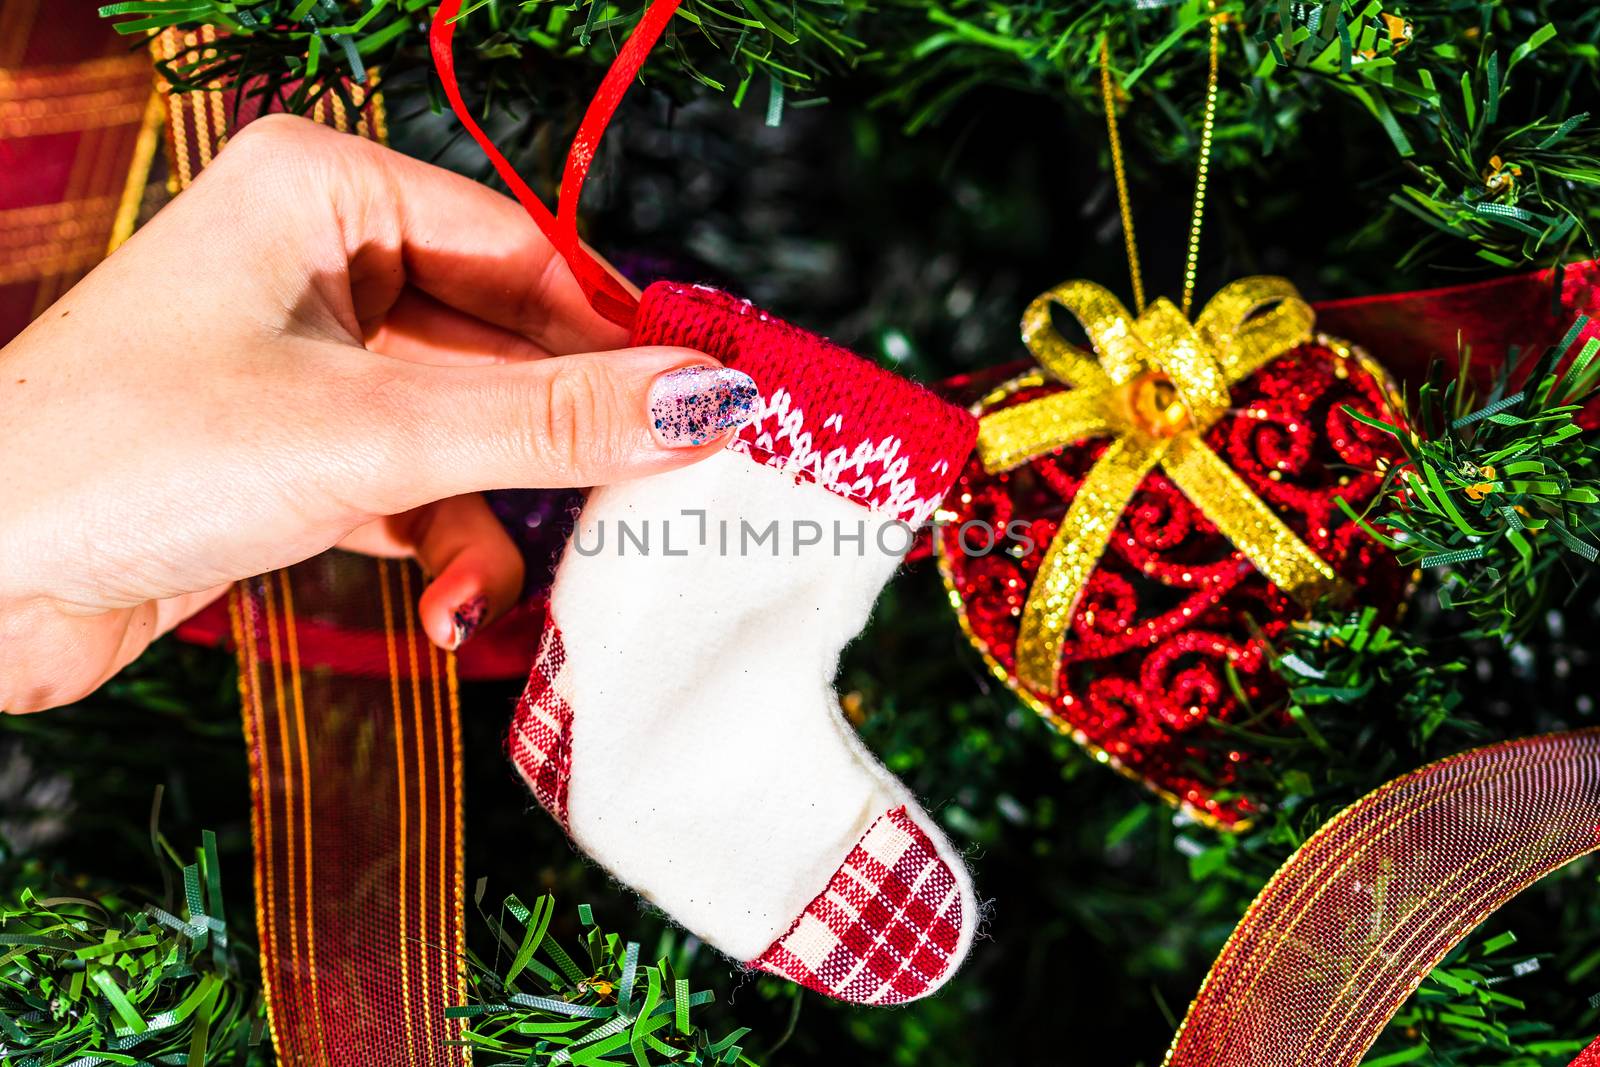 Decorating Christmas tree, hand putting Christmas decorations on by vladispas